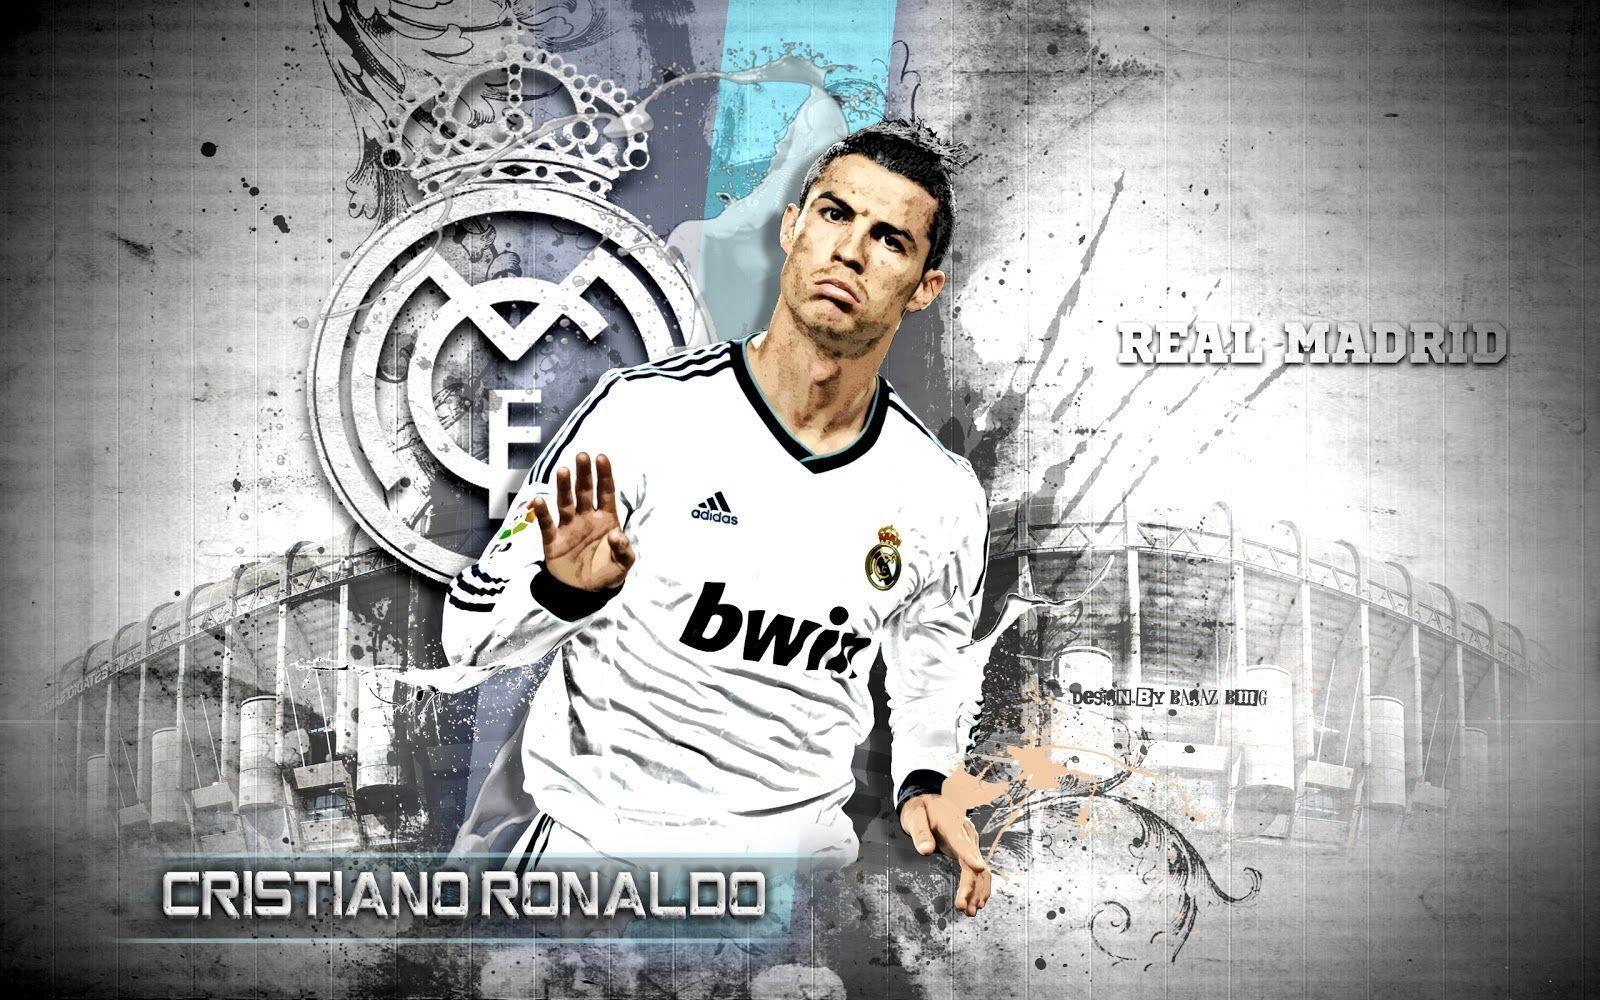 Cristiano Ronaldo Wallpaper, Free Wallpaper, Best Soccer Player